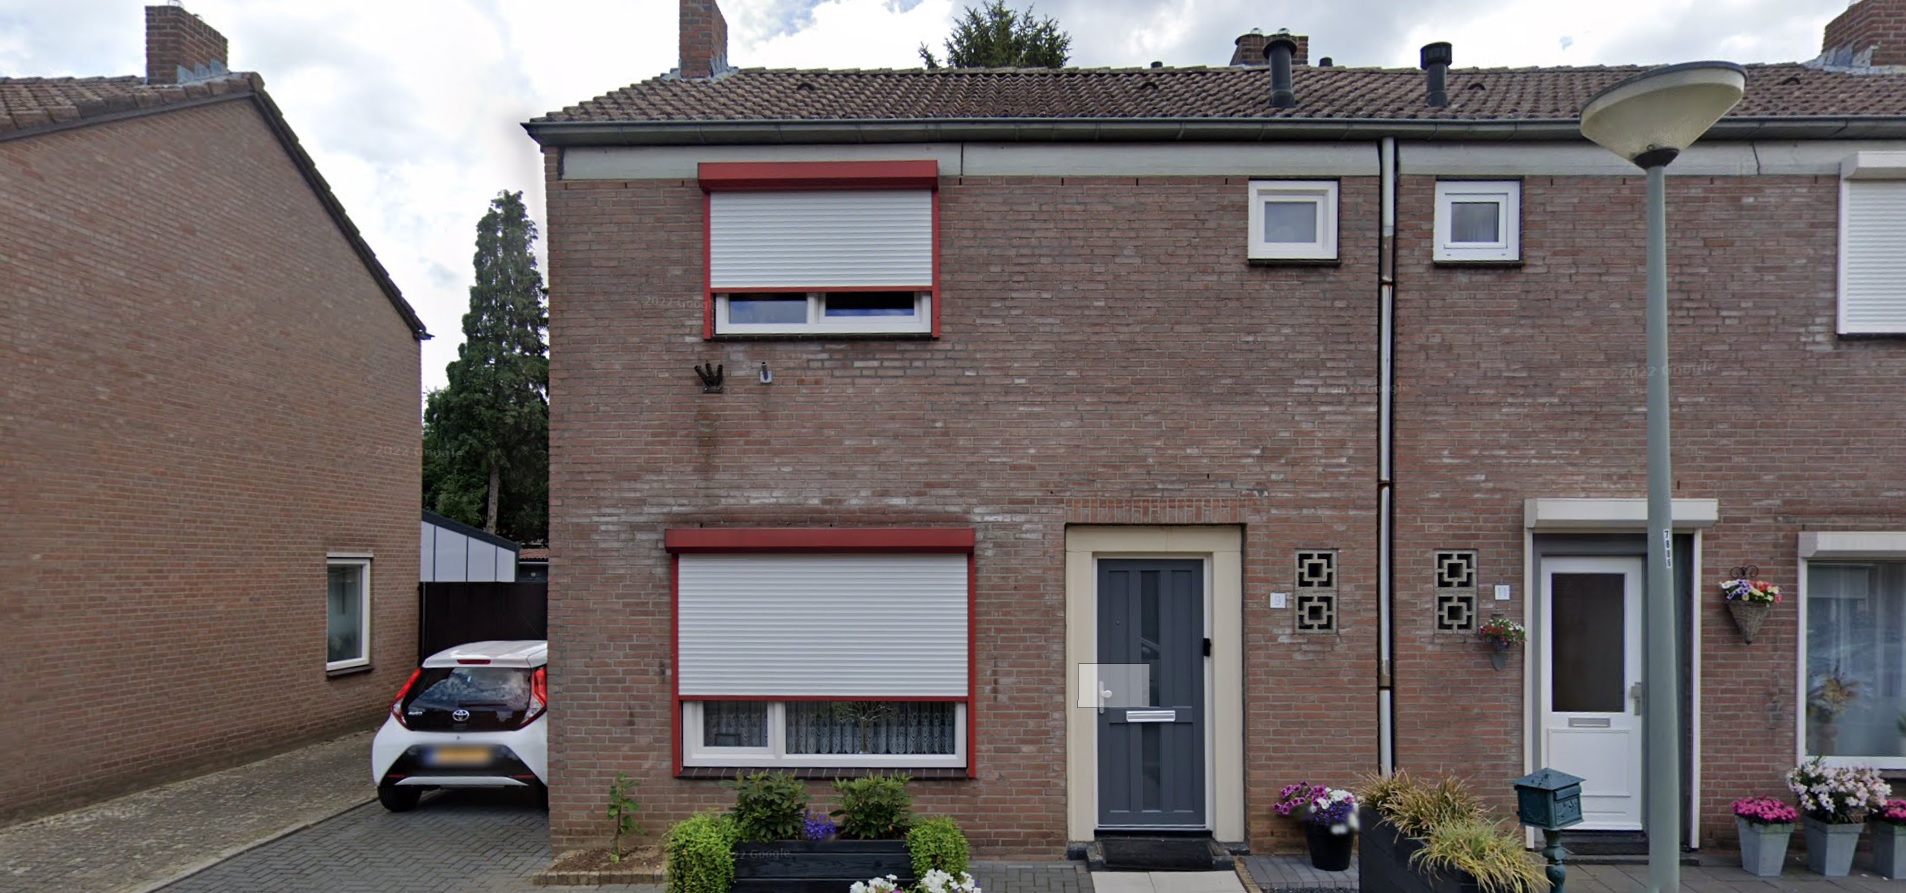 Trompstraat 9, 6045 XP Roermond, Nederland